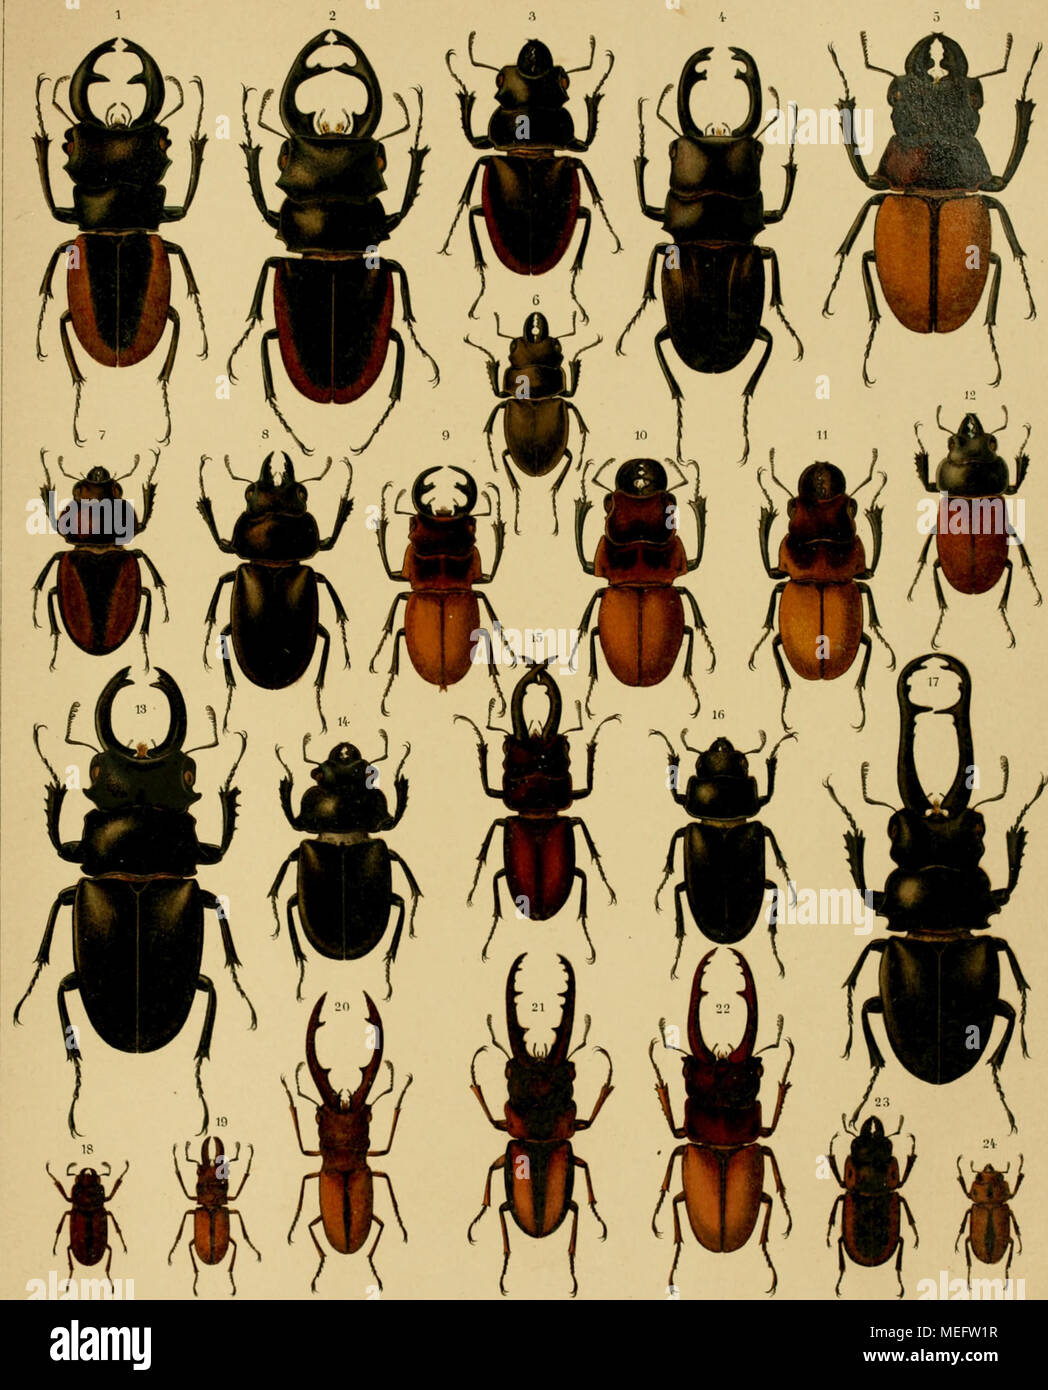 . Die exotischen Käfer in Wort und Bild . 1. Odontolabi» Wollastoni, 2, 8. »inensU, 4. carinatus, 5. gazella, 6. platynotus. 7. Neolocanug marginatus. 8. lania 9—11. Odont. Brookeanus. 18. Neolue. castanoptecus. 18. Odont. Siwa, 14. Dalmani. 15. Paalidoremus inolinatos. 16?, 17 &lt;J. Cladognathtis giraffa. 189, 19, 20g. CyolopUthalmus taraadus. gl. Cladogn. Savagei, Sä. oinnamomeu«, 98. bison, 81. oooipitalia. VerUc,- vgr. Err: Heyne,Leigag .. Stock Photo